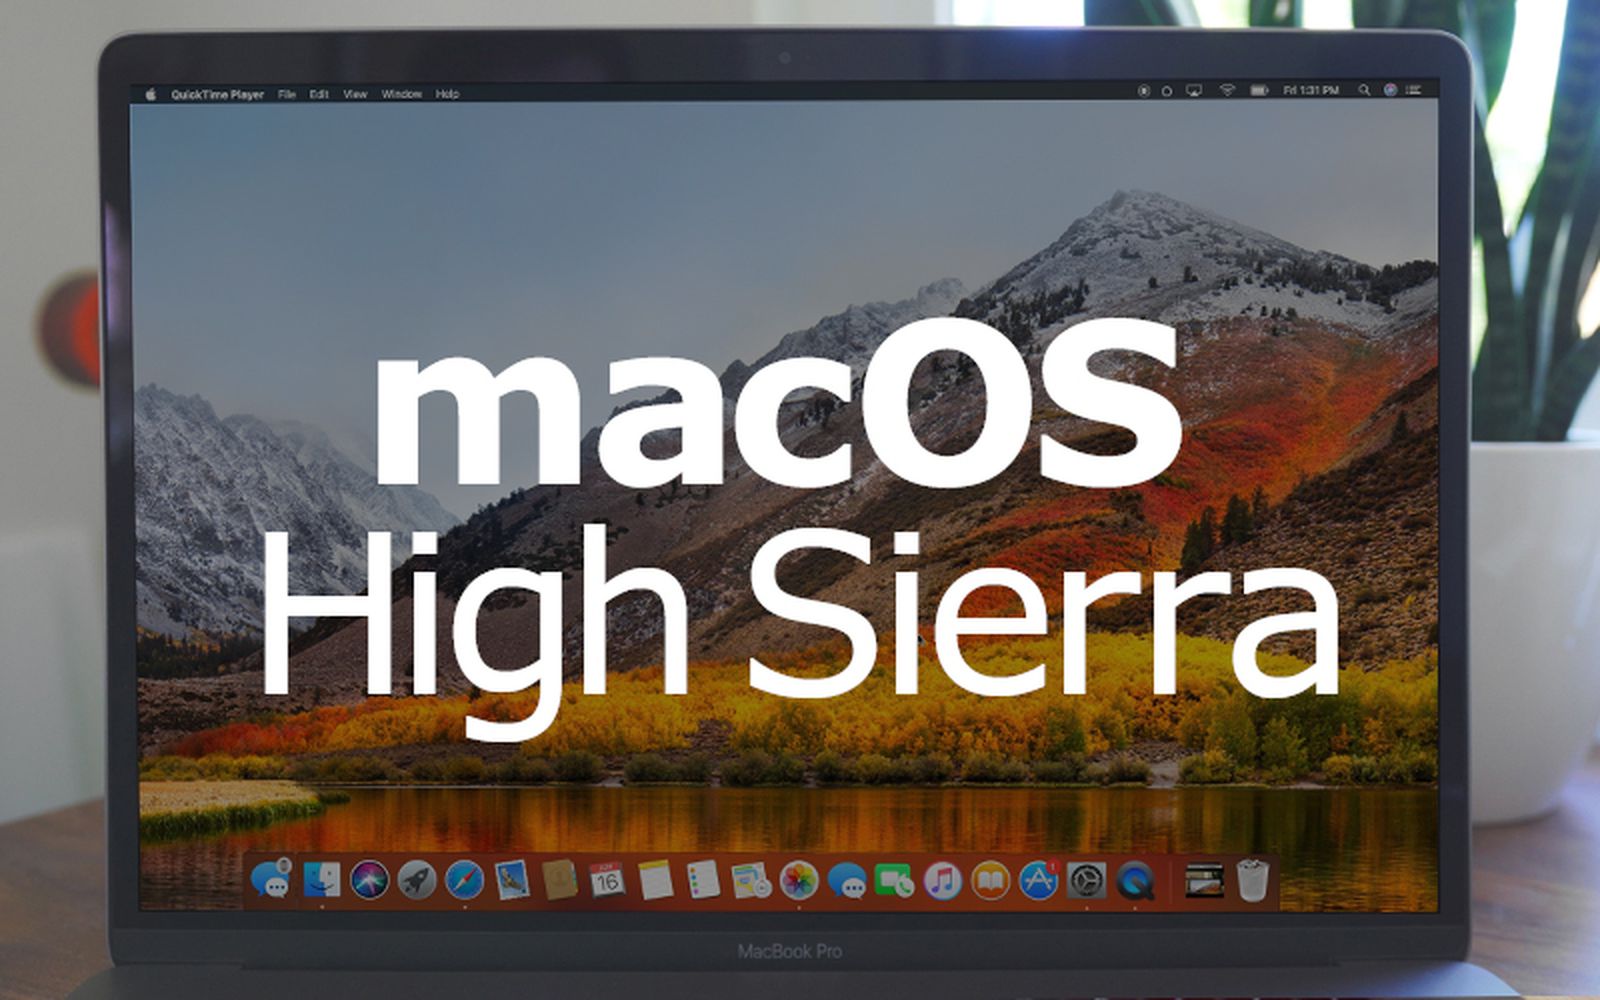 mac os high sierra for macbook pro retina display review